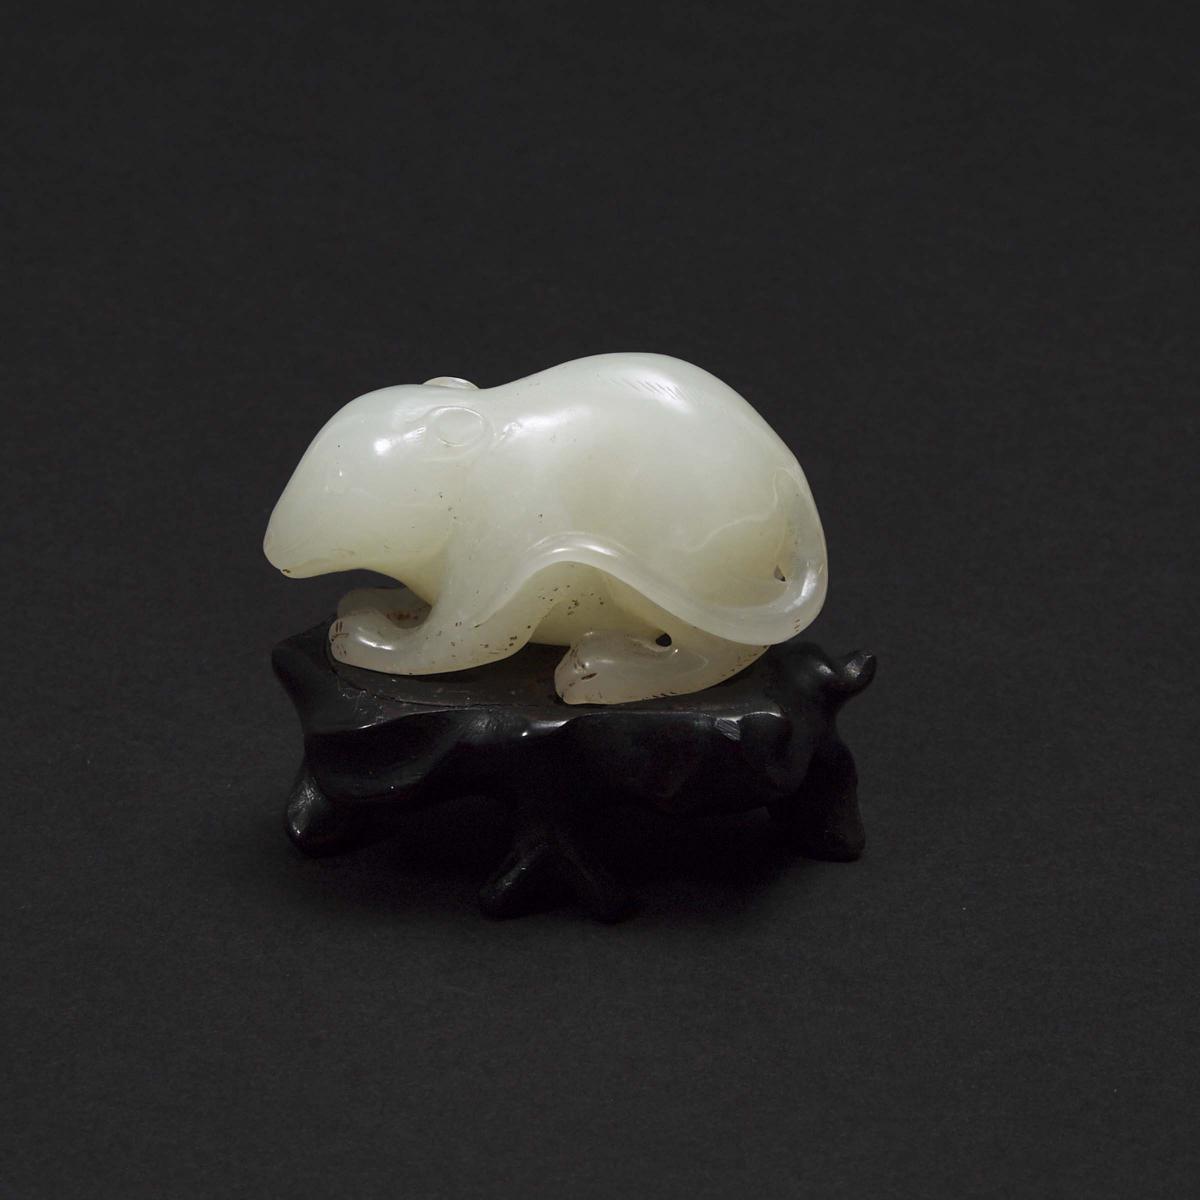 A White Jade Figure of a Rat, 白玉鼠摆件, 1.3 x 2.3 x 1.1 in — 3.3 x 5.8 x 2.7 cm